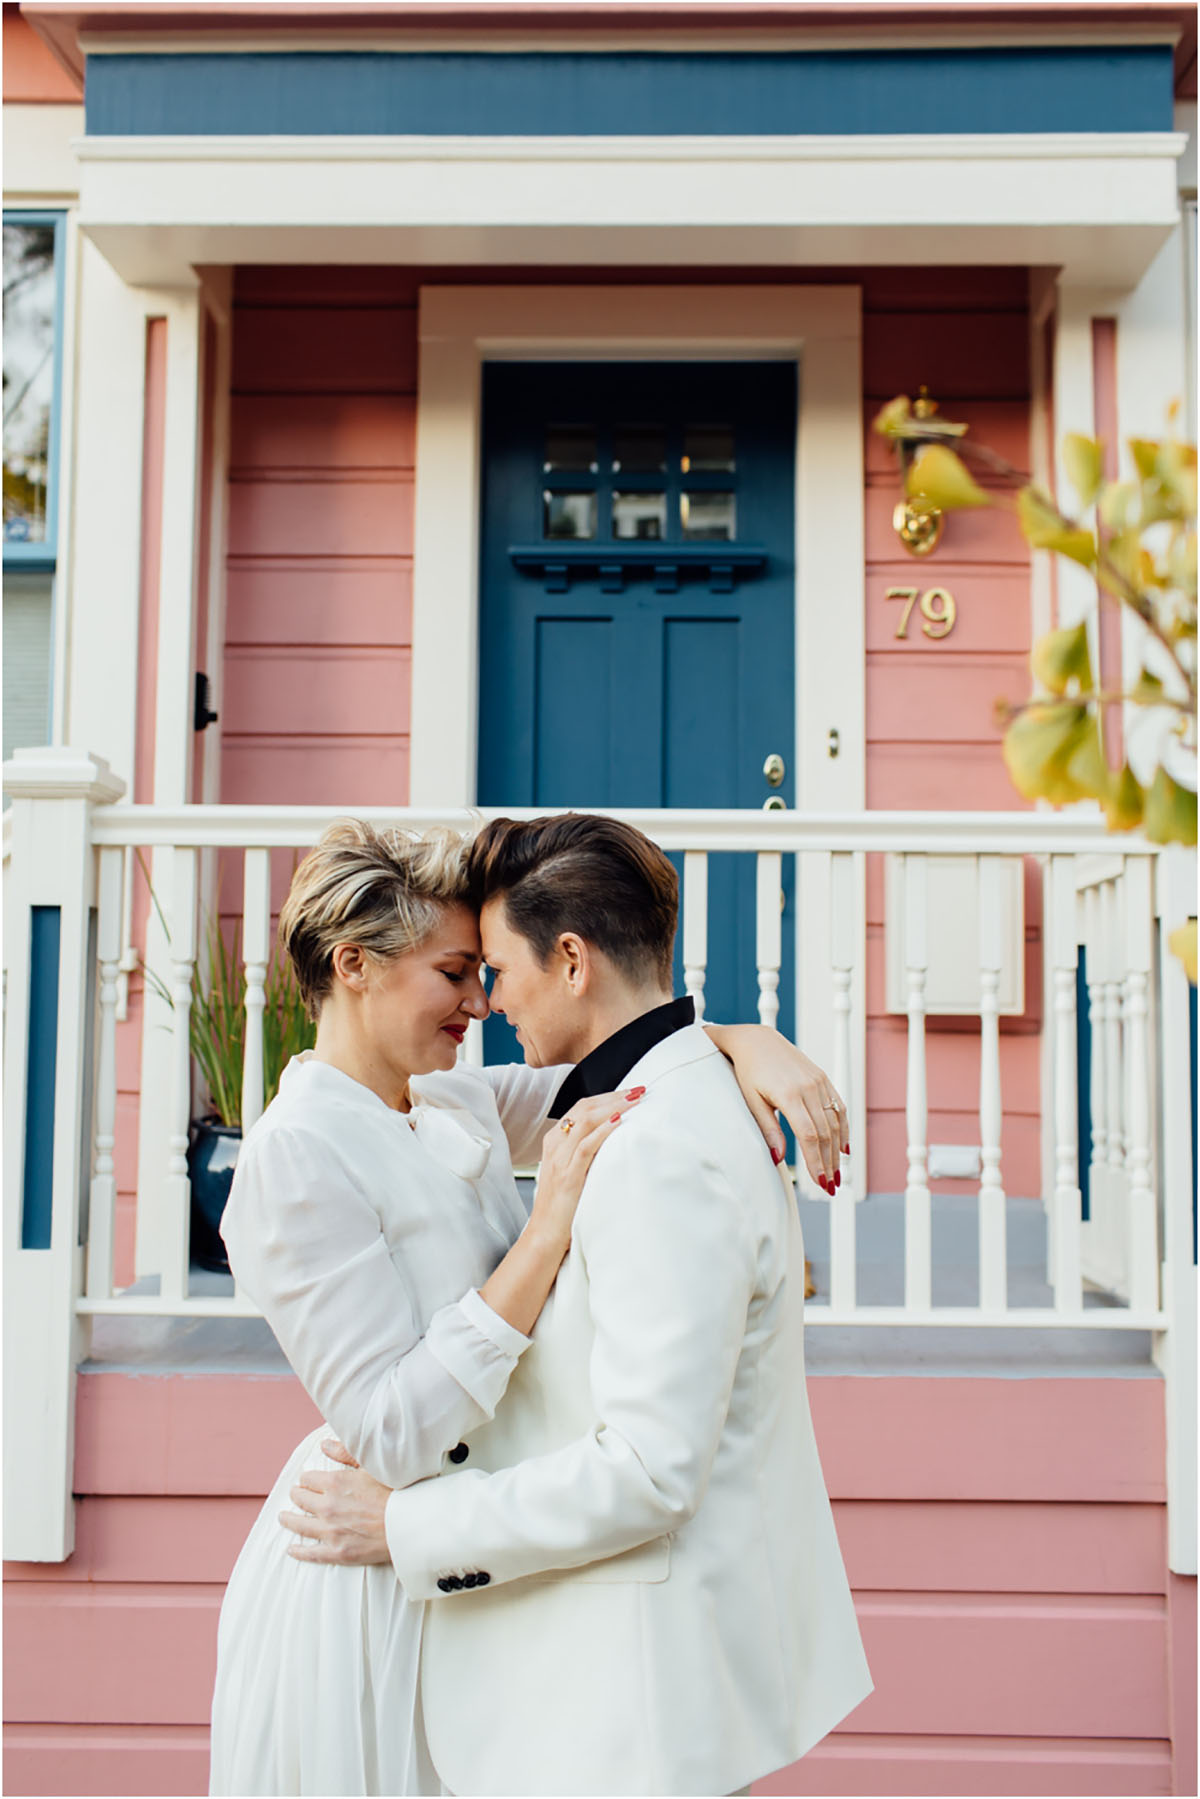 Stylish San Francisco, California, engagement tea length white dress short hair white tuxedo high heels pink house porch